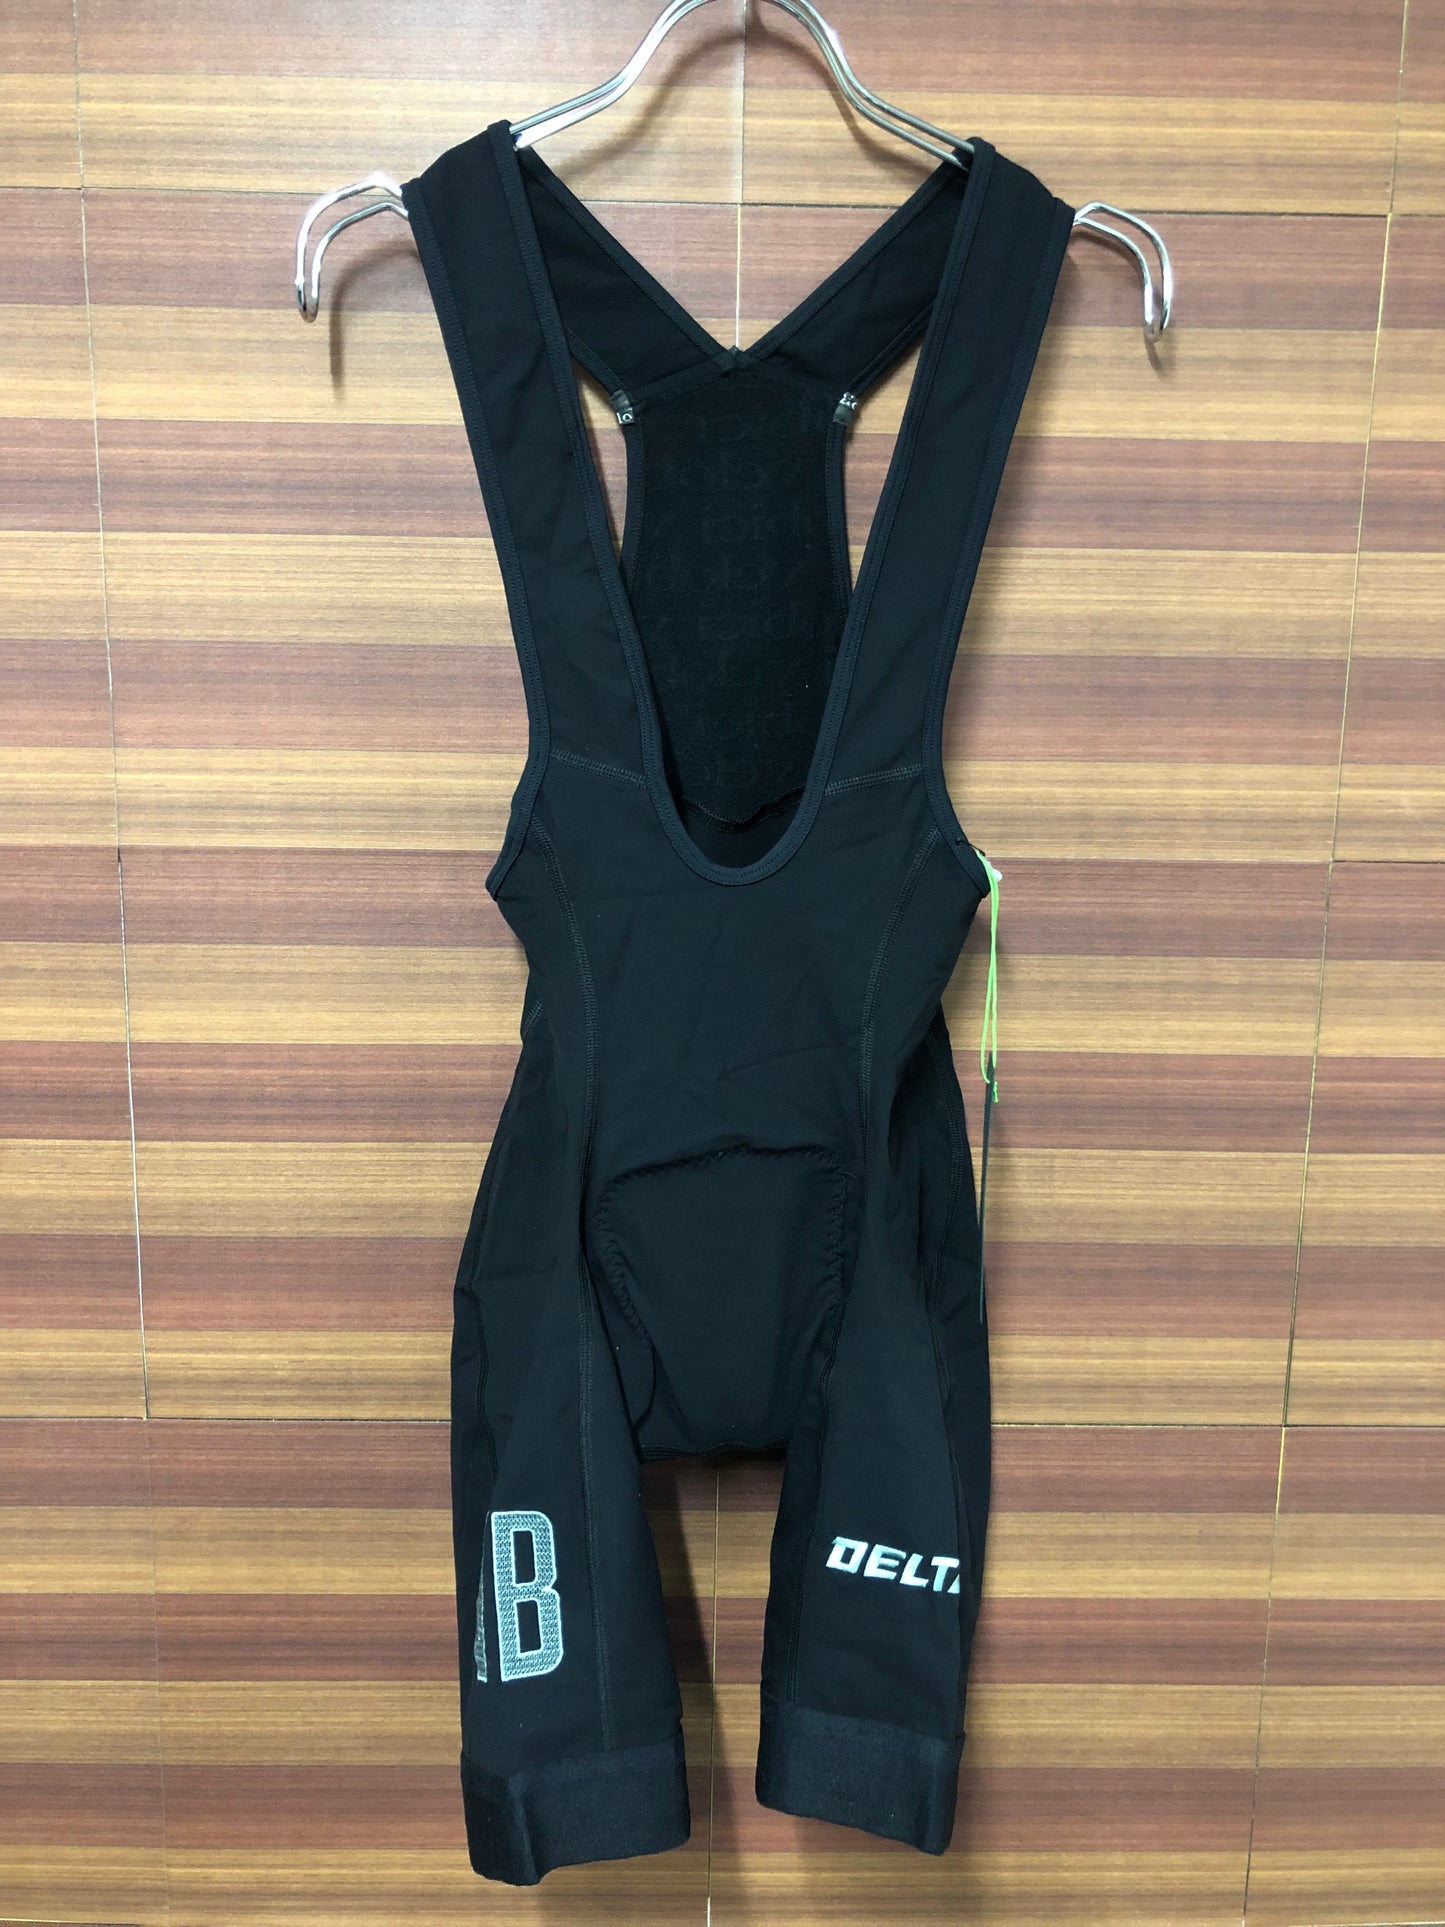 HM342 VELOBICI ヴェロビチ Delta Bib Shorts ビブショーツ Women Black/Seaform WXXS